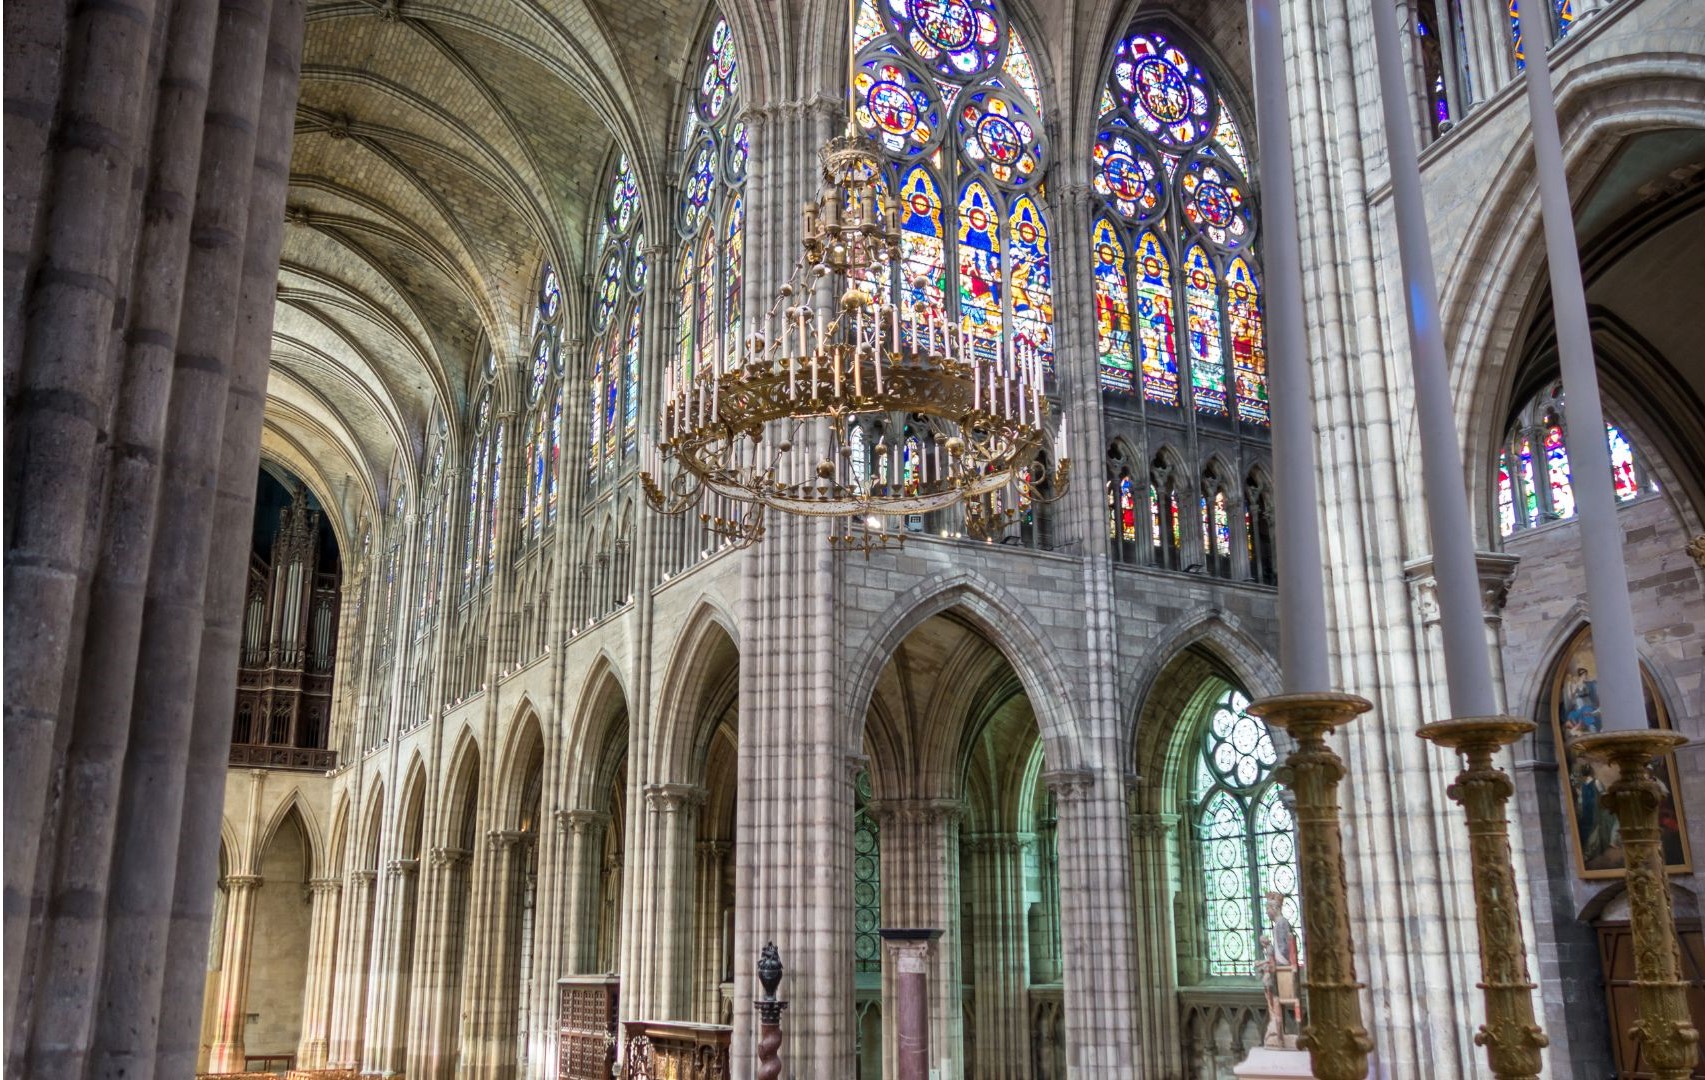 The stunning interior of the Basilica of Saint-Denis